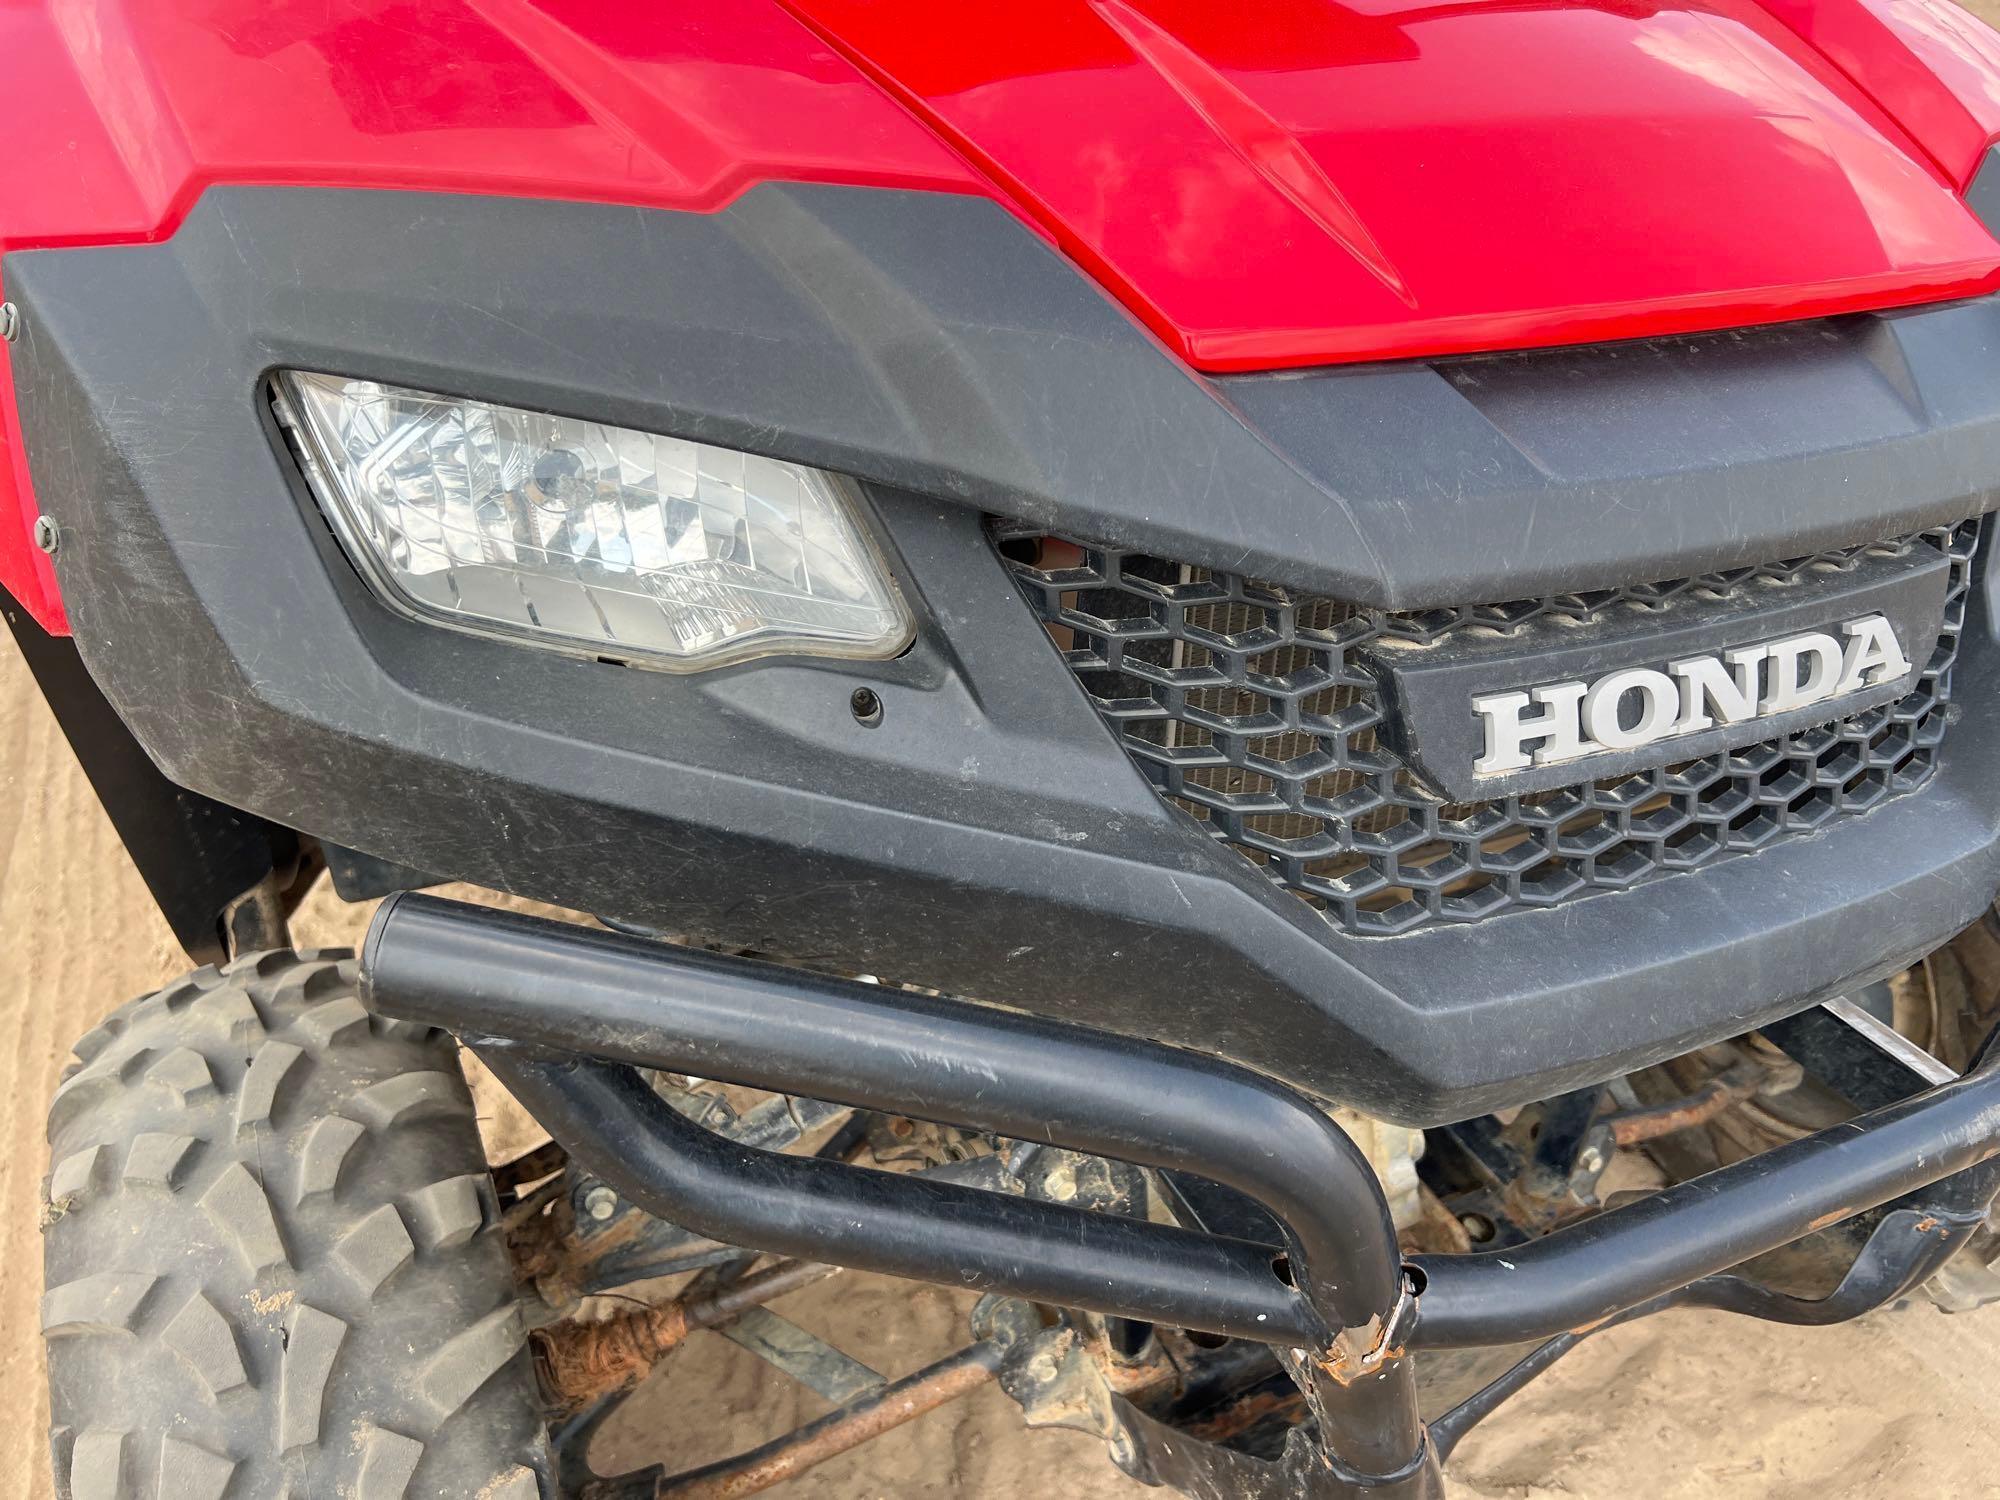 2015 HONDA PIONEER 700 - ATV